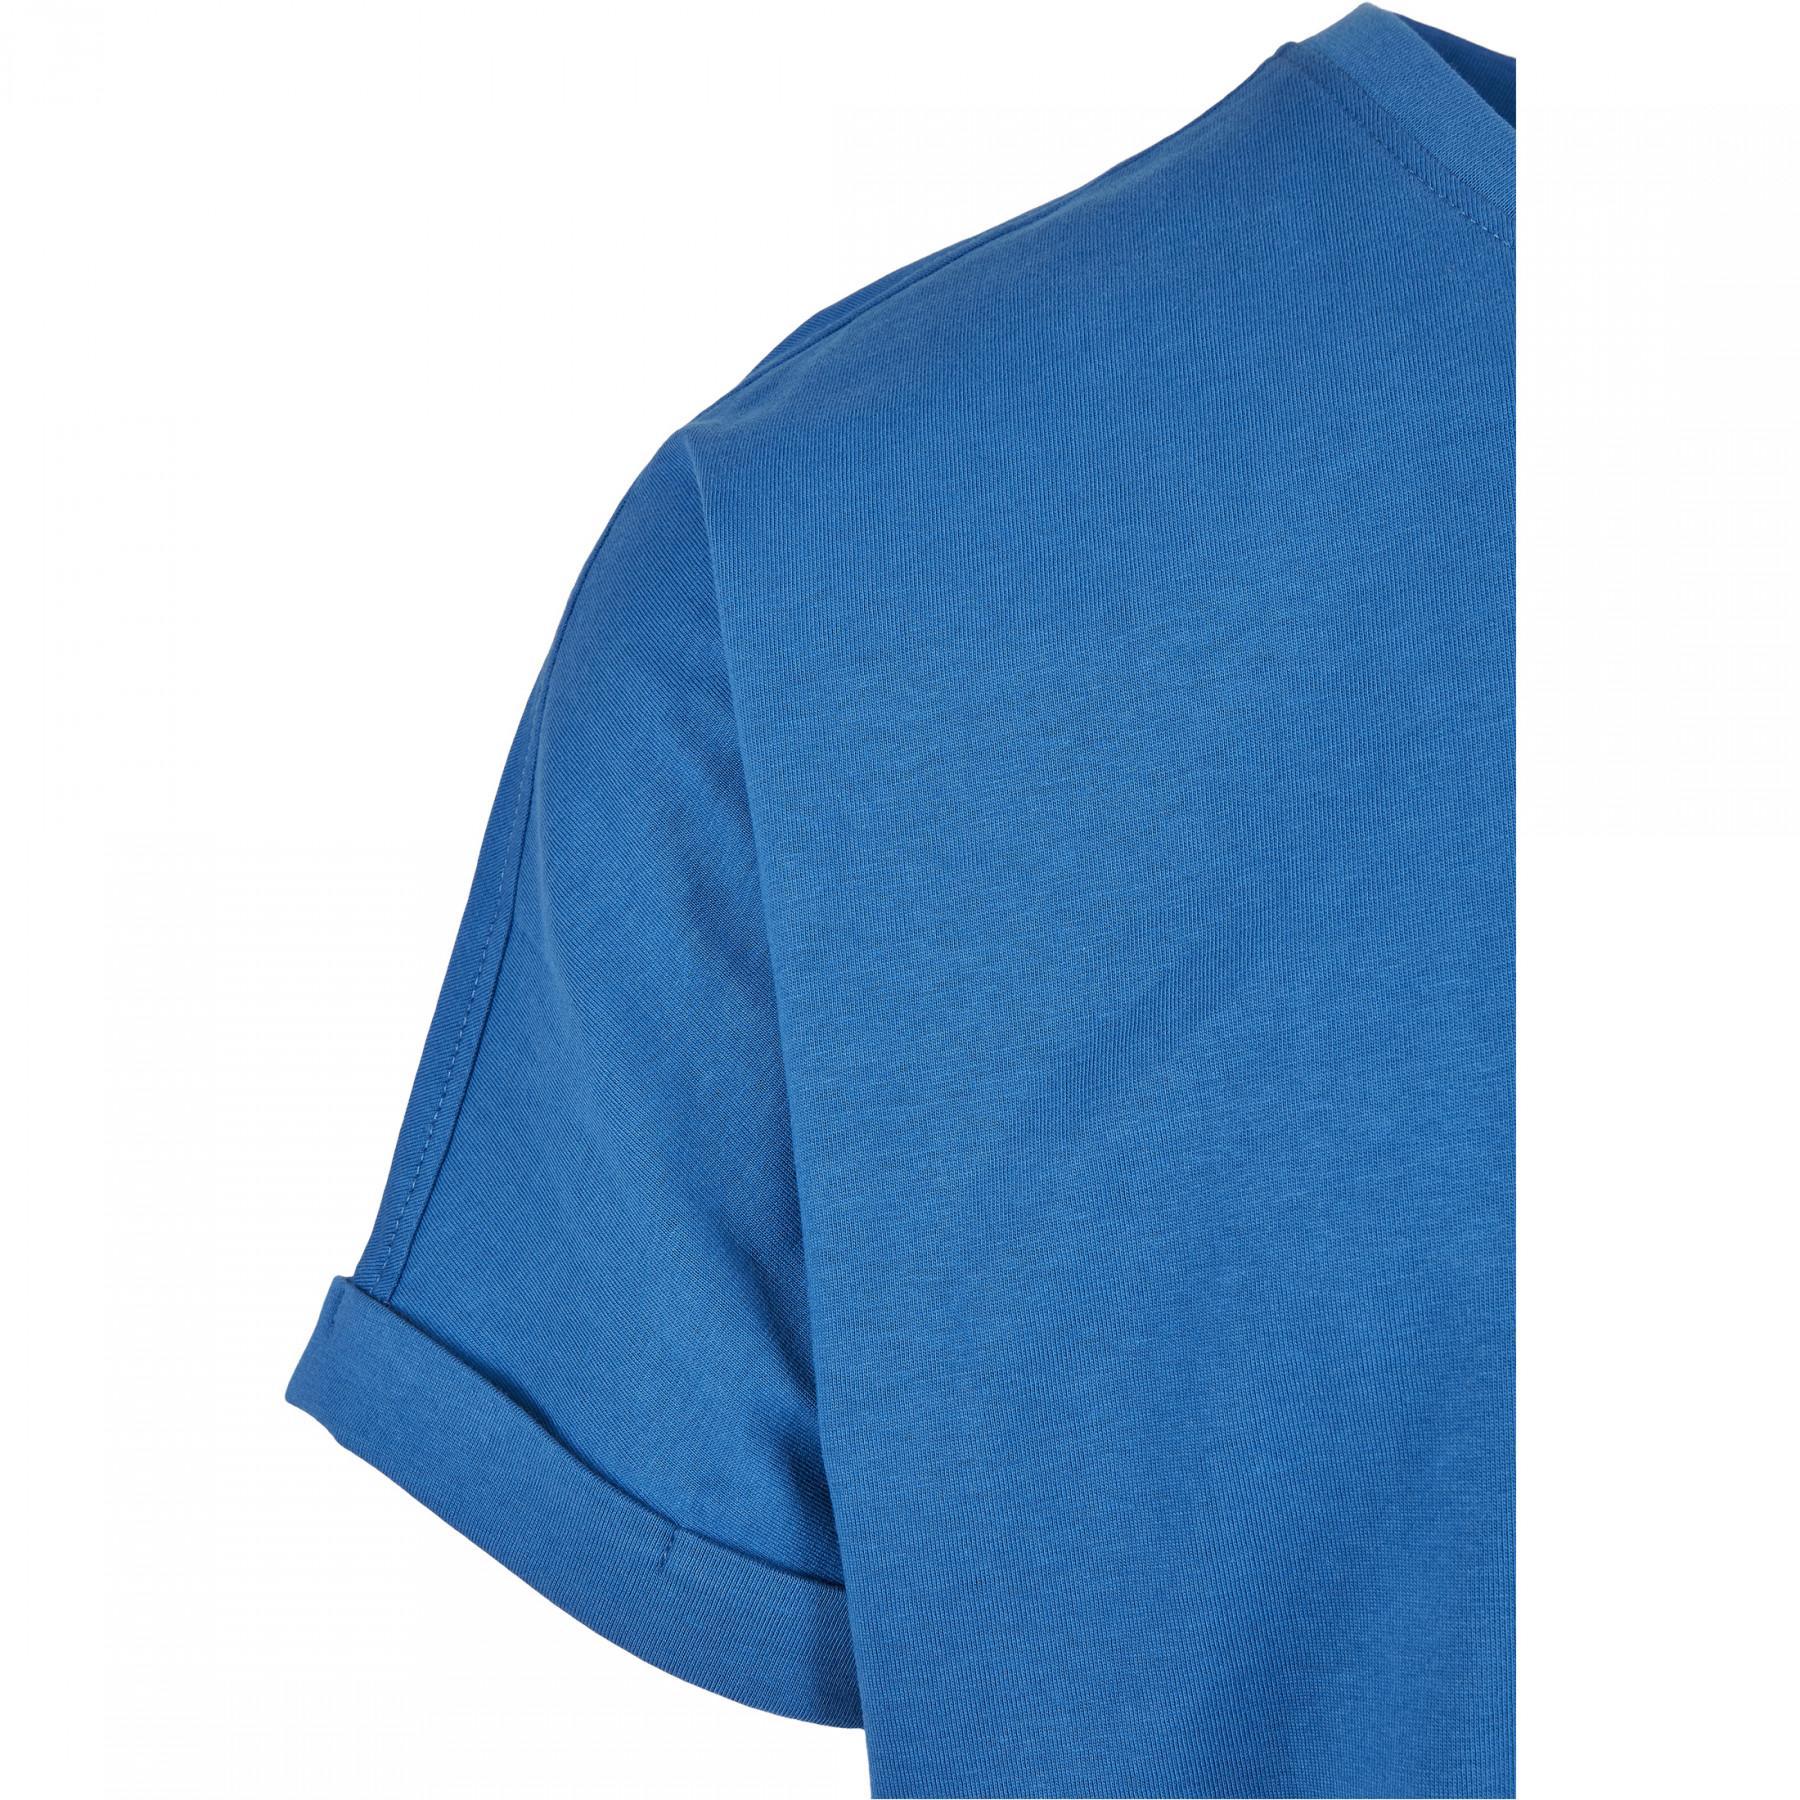 Long T-shirts shirts Classics - Urban - T-shirt - Lifestyle Turnup Man Shaped Tee and Polo